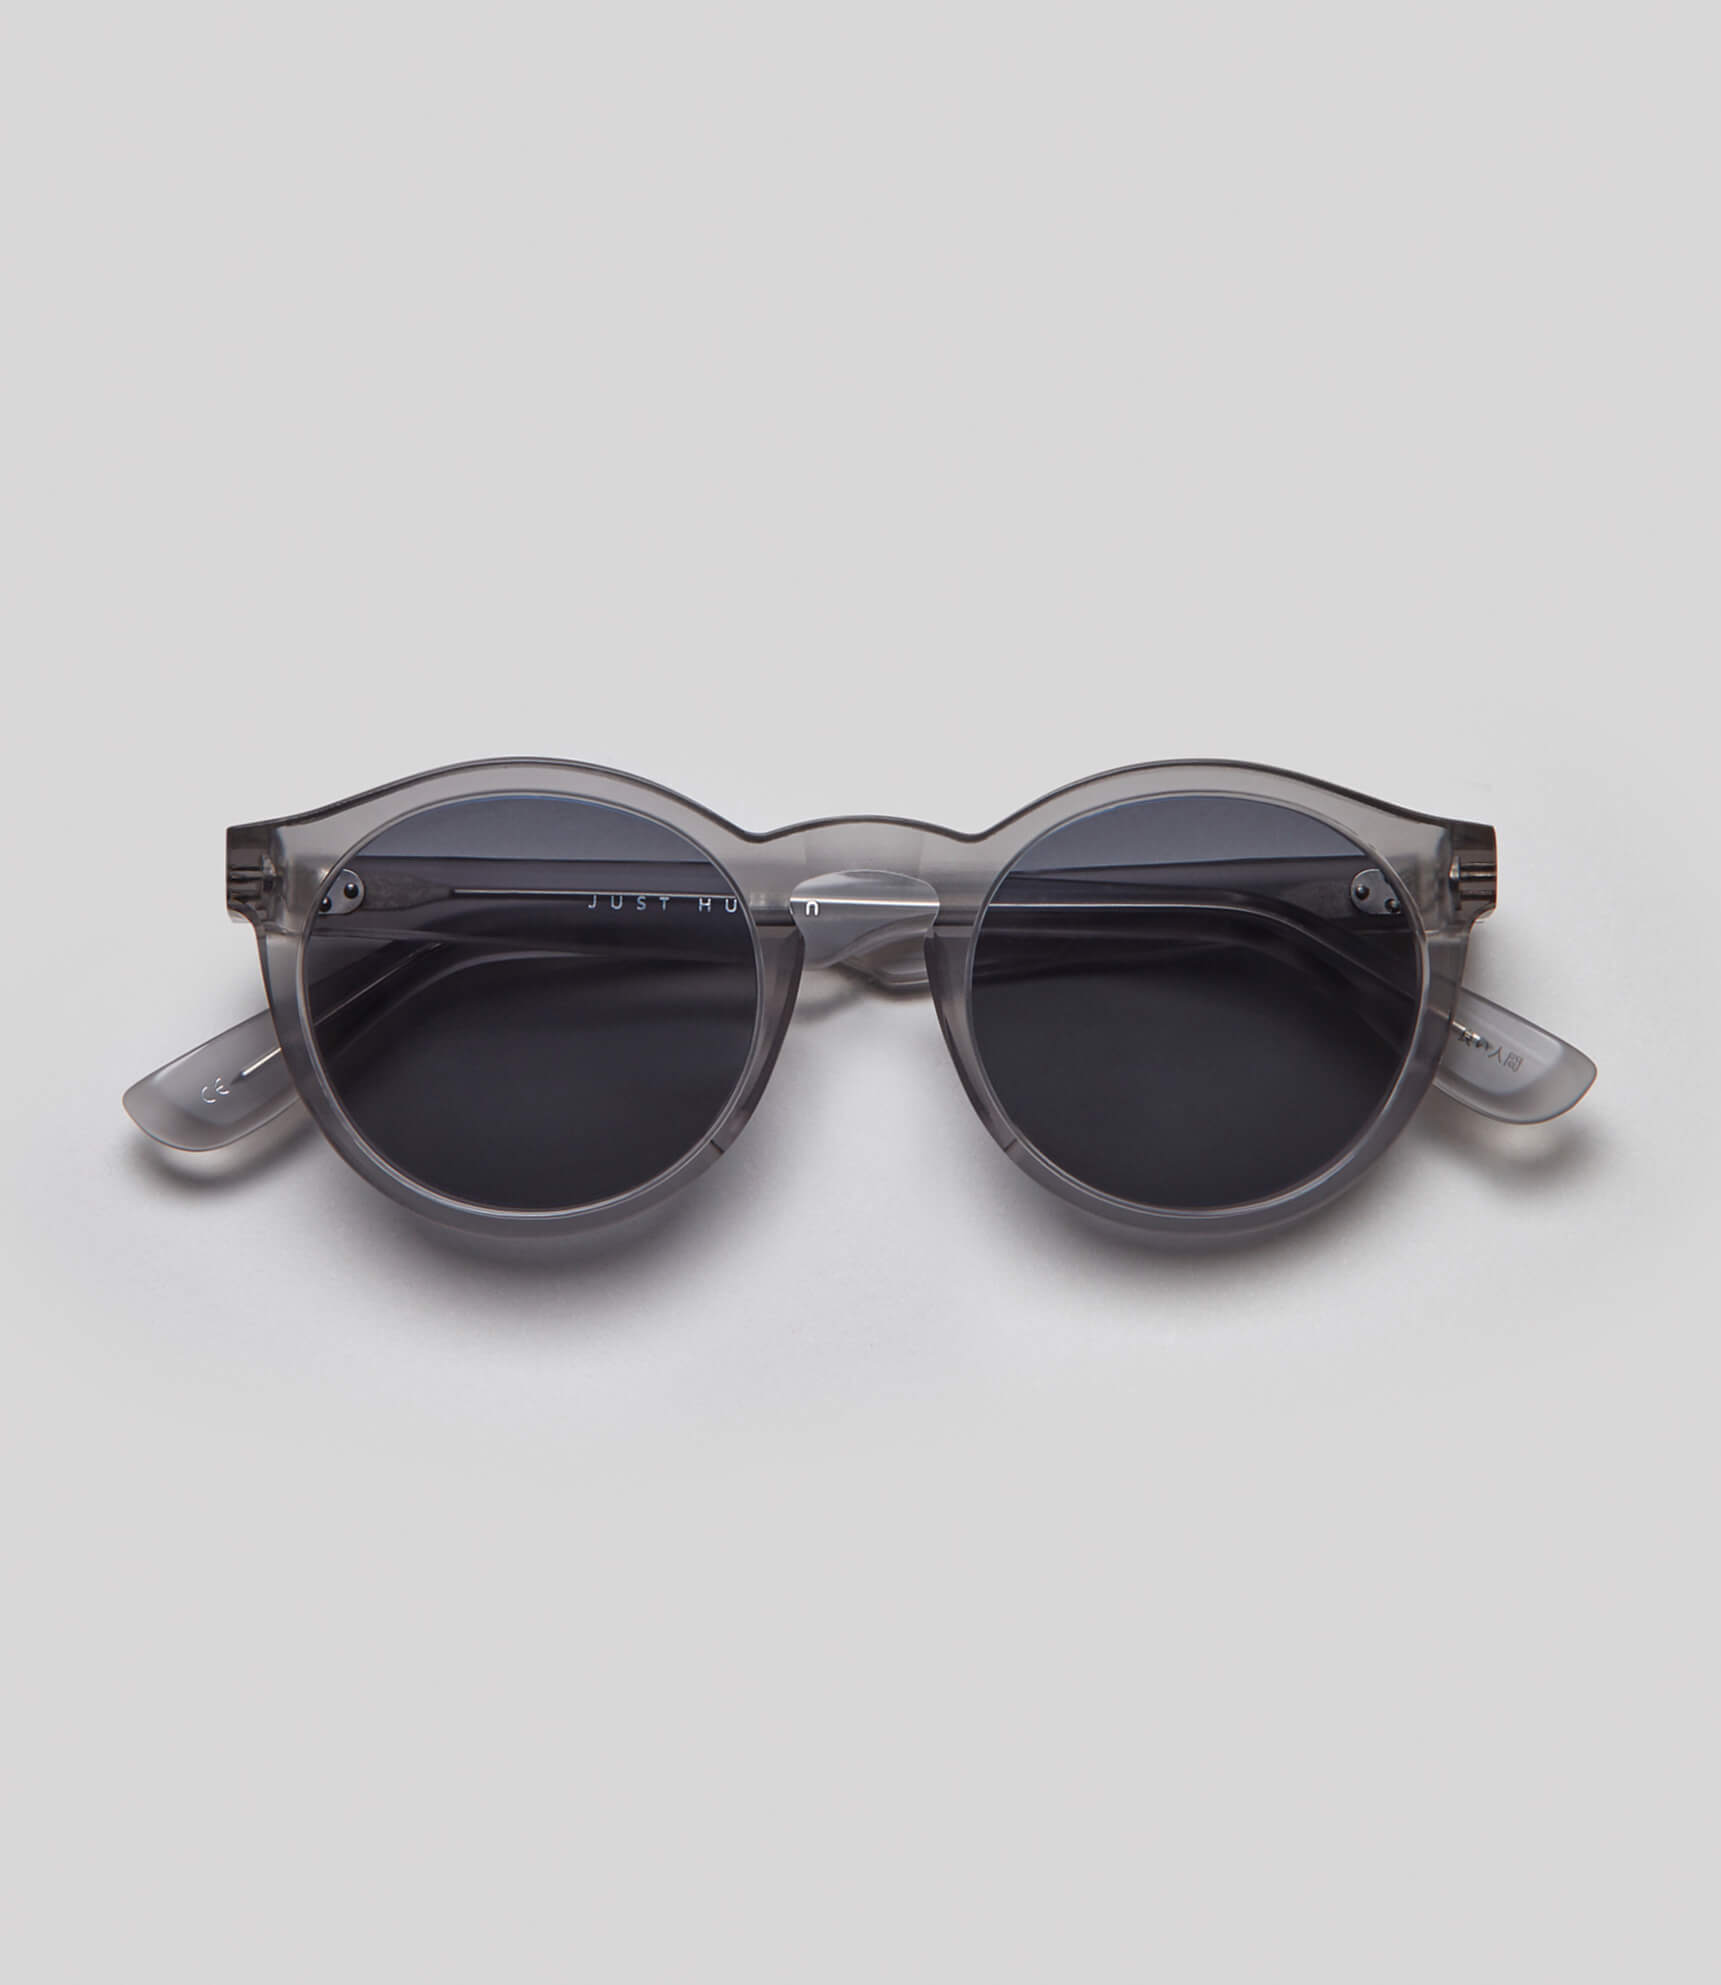 Just Human - Modern Round 01 Sunglasses